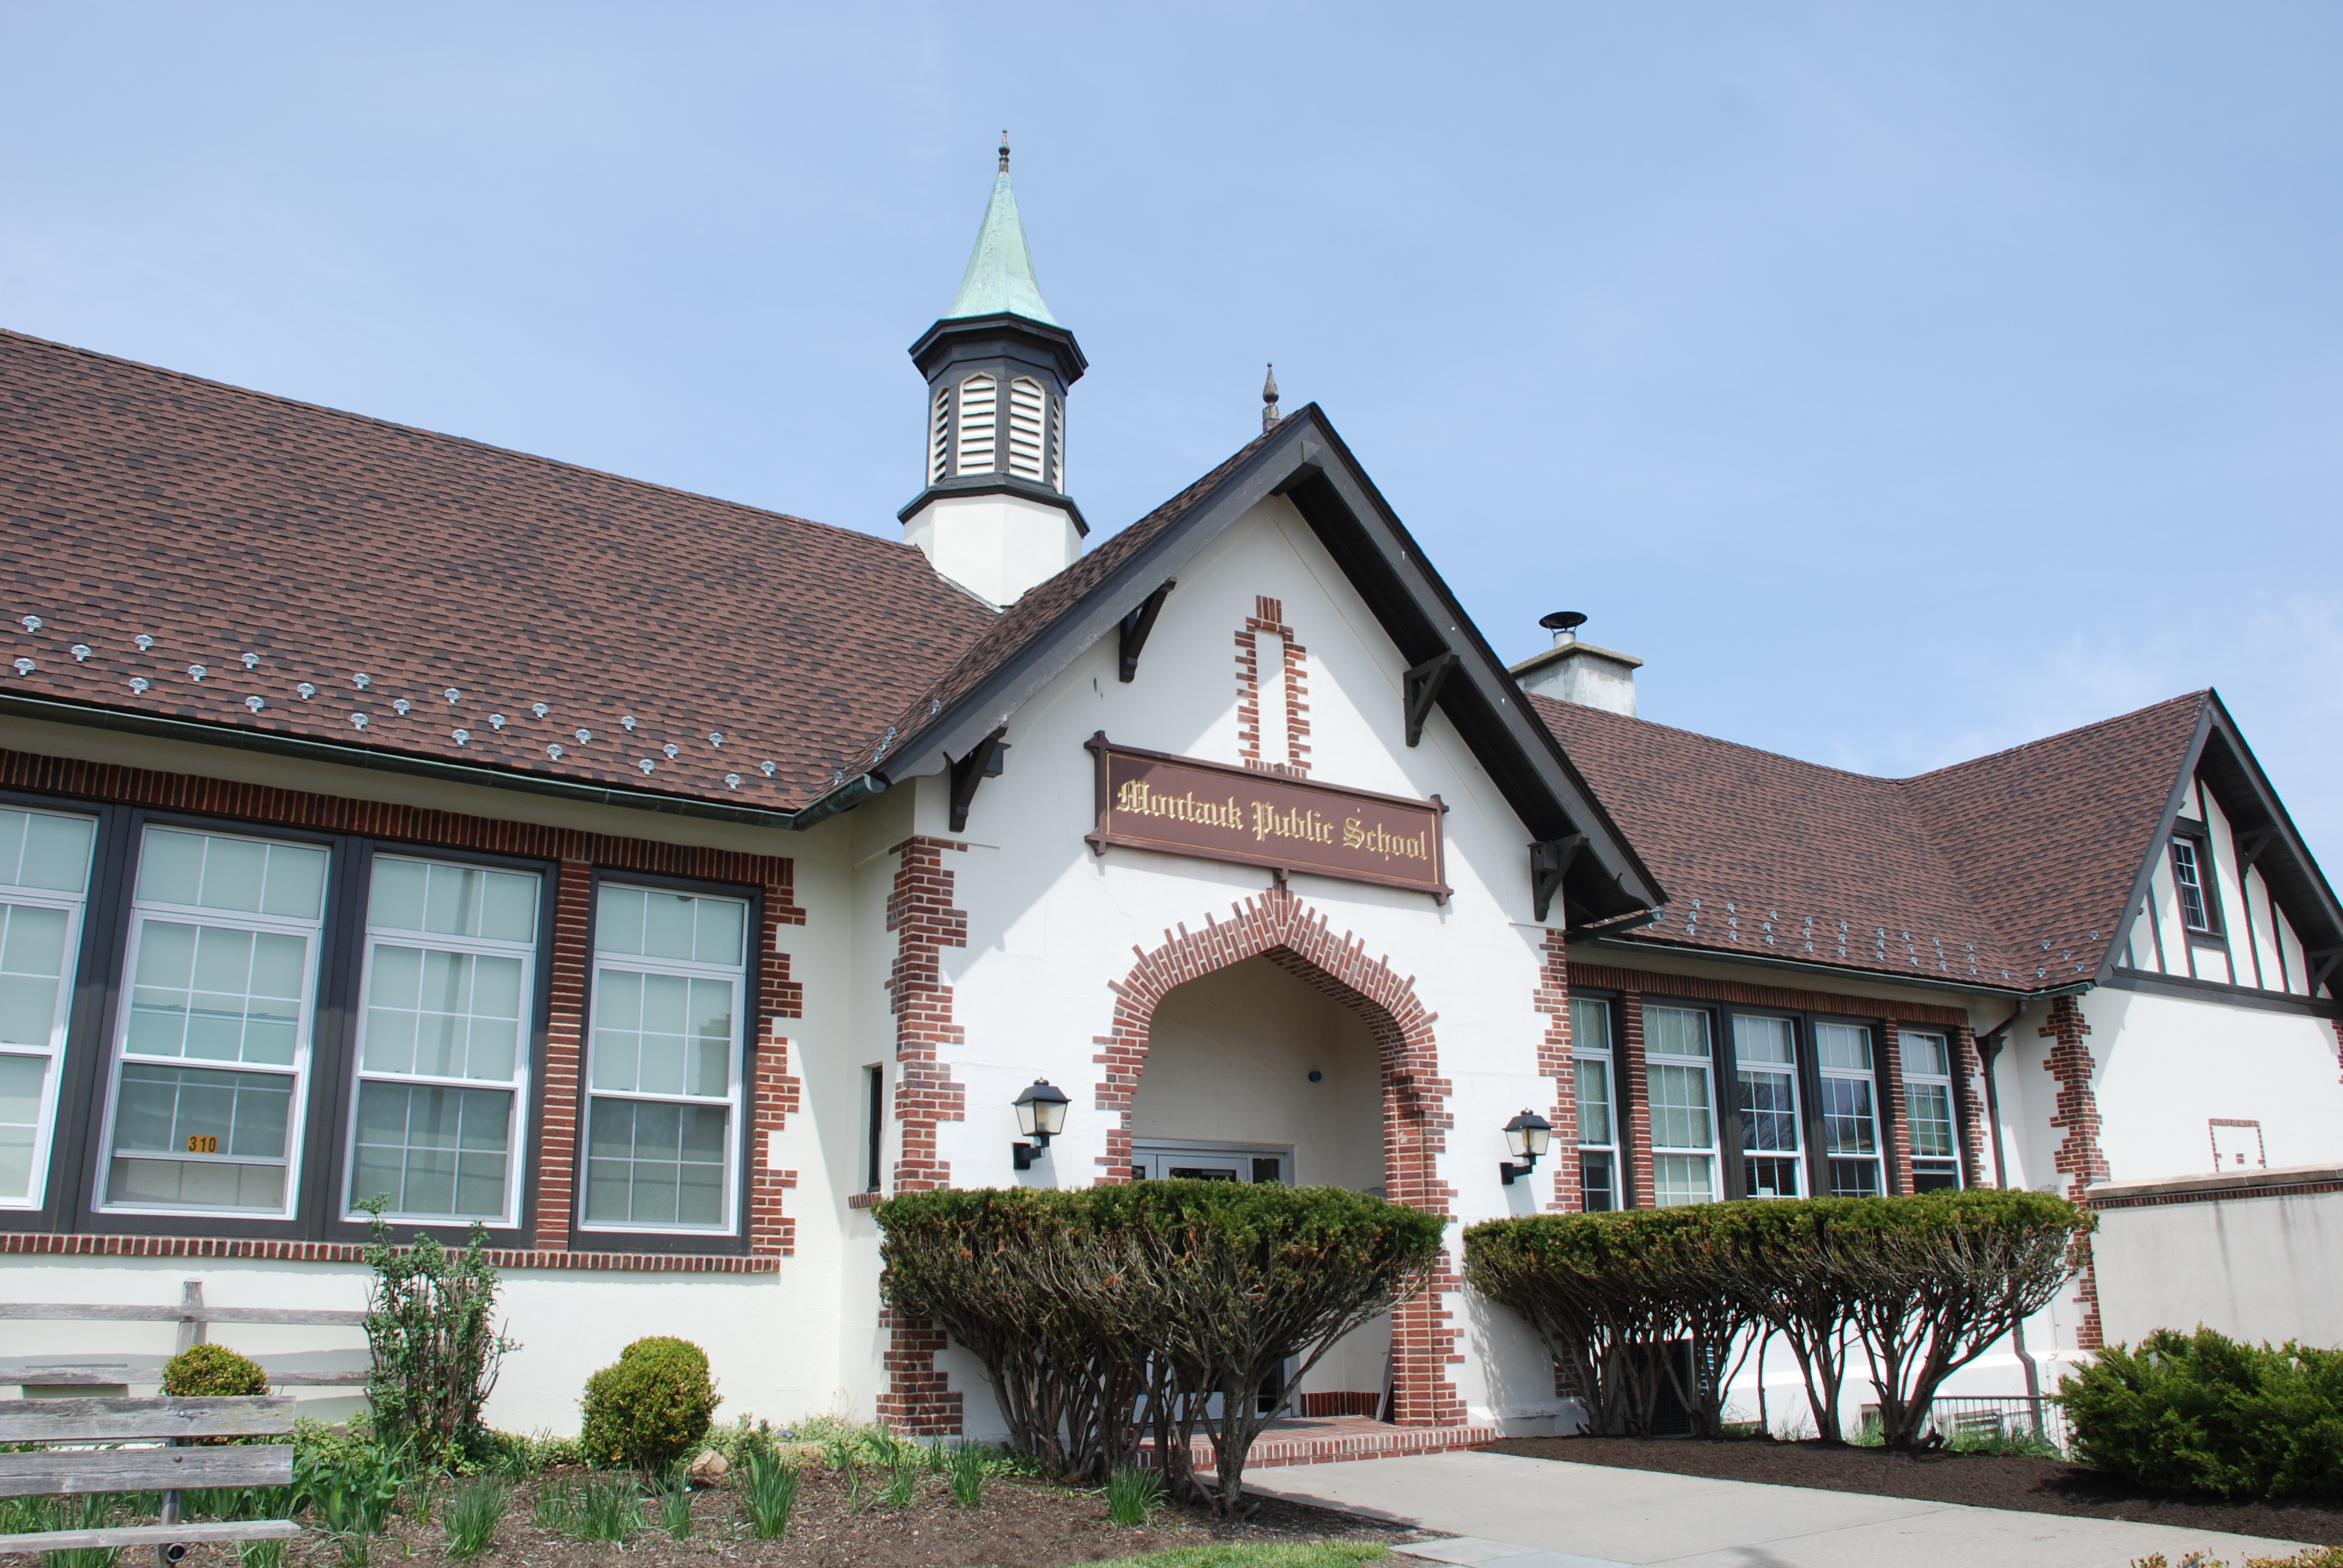 Image of the front of Montauk Public School